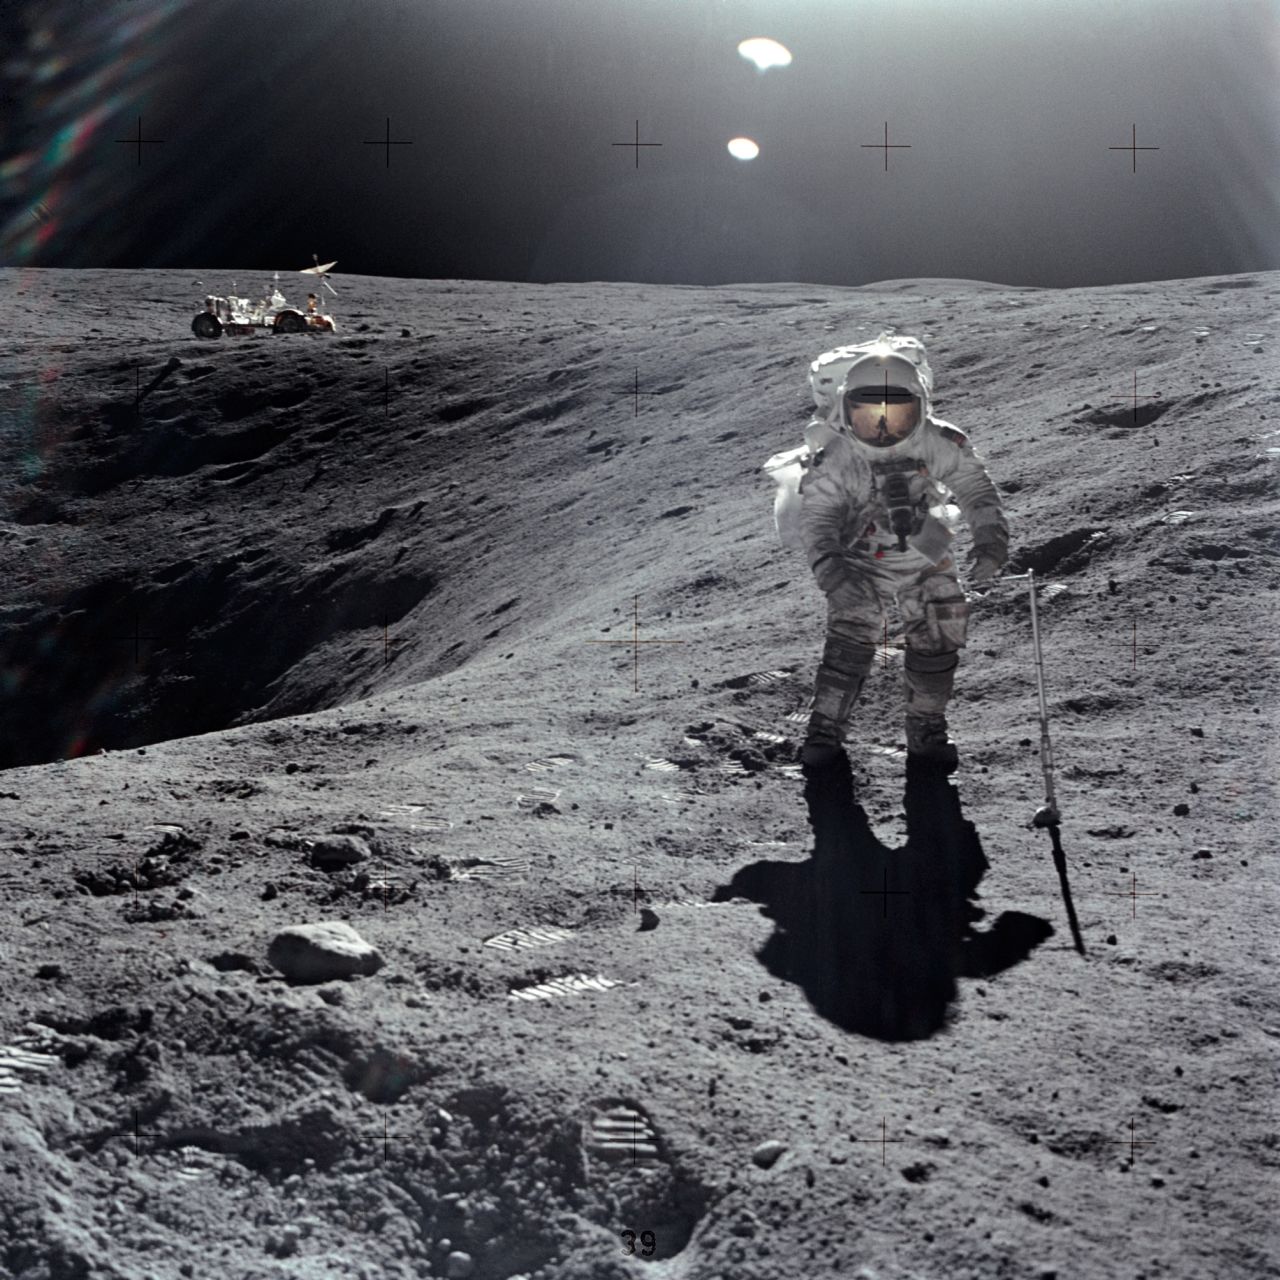 Duke collects lunar samples.